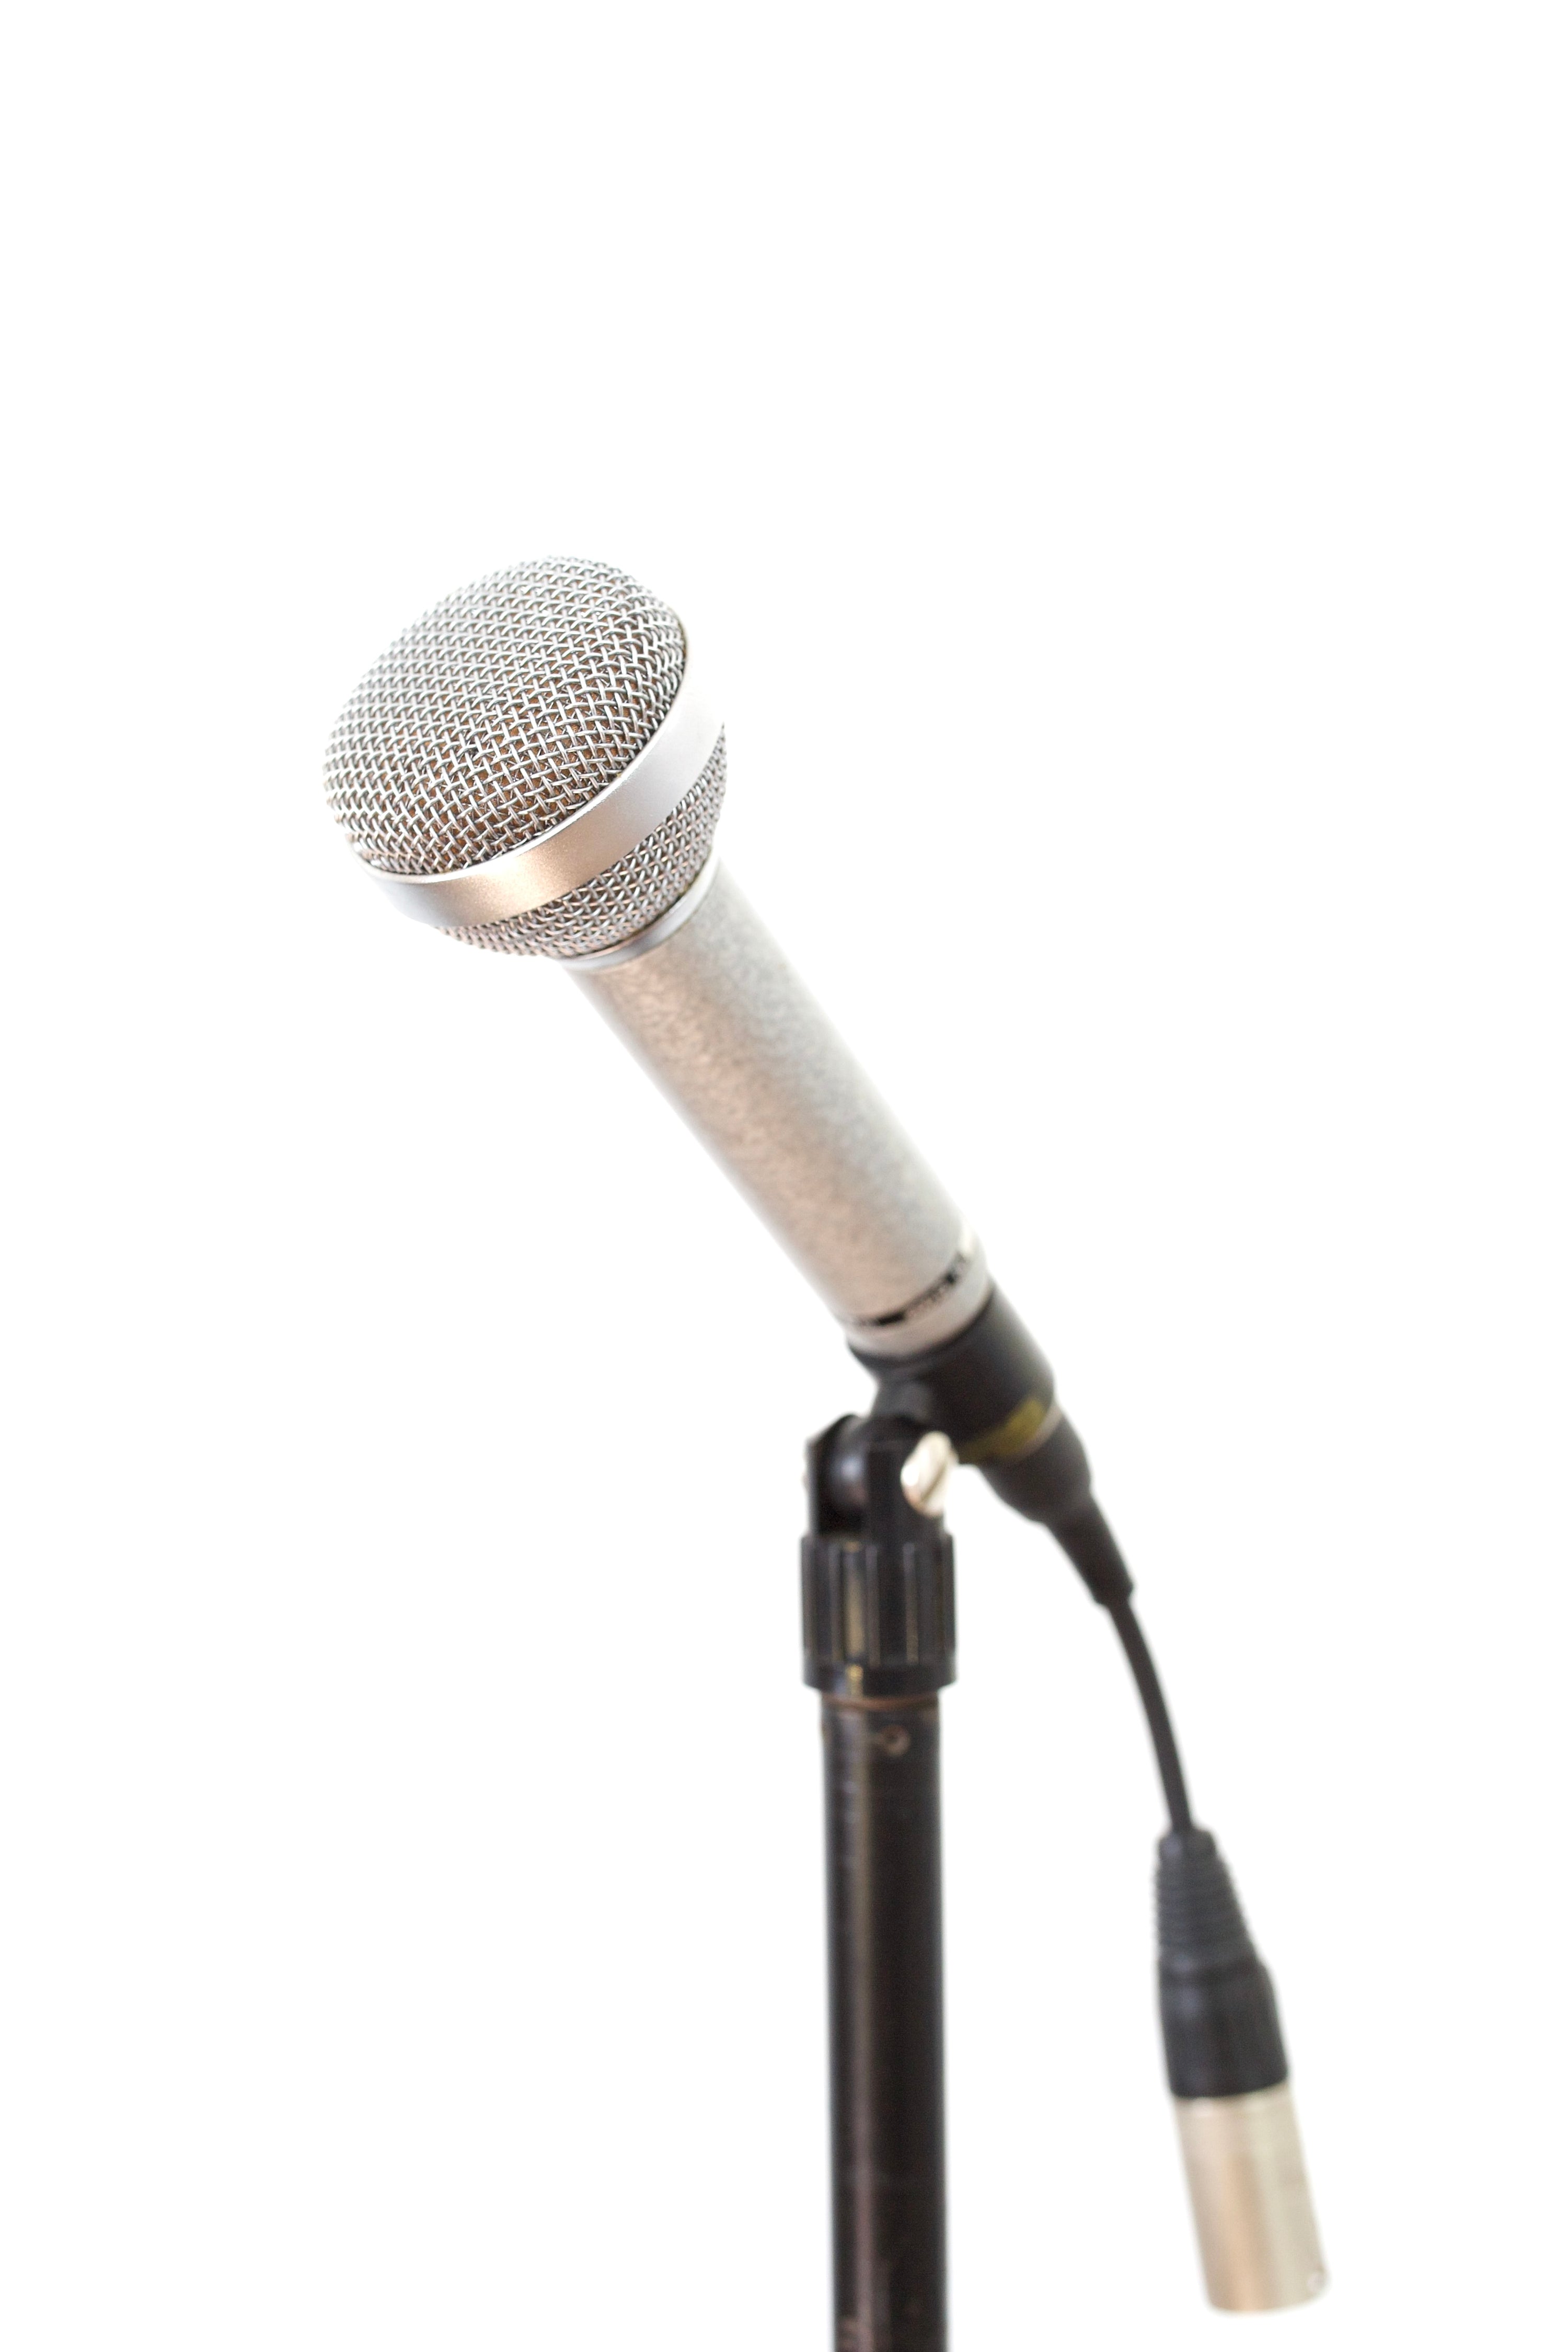 Beyer M61 Dynamic Microphone